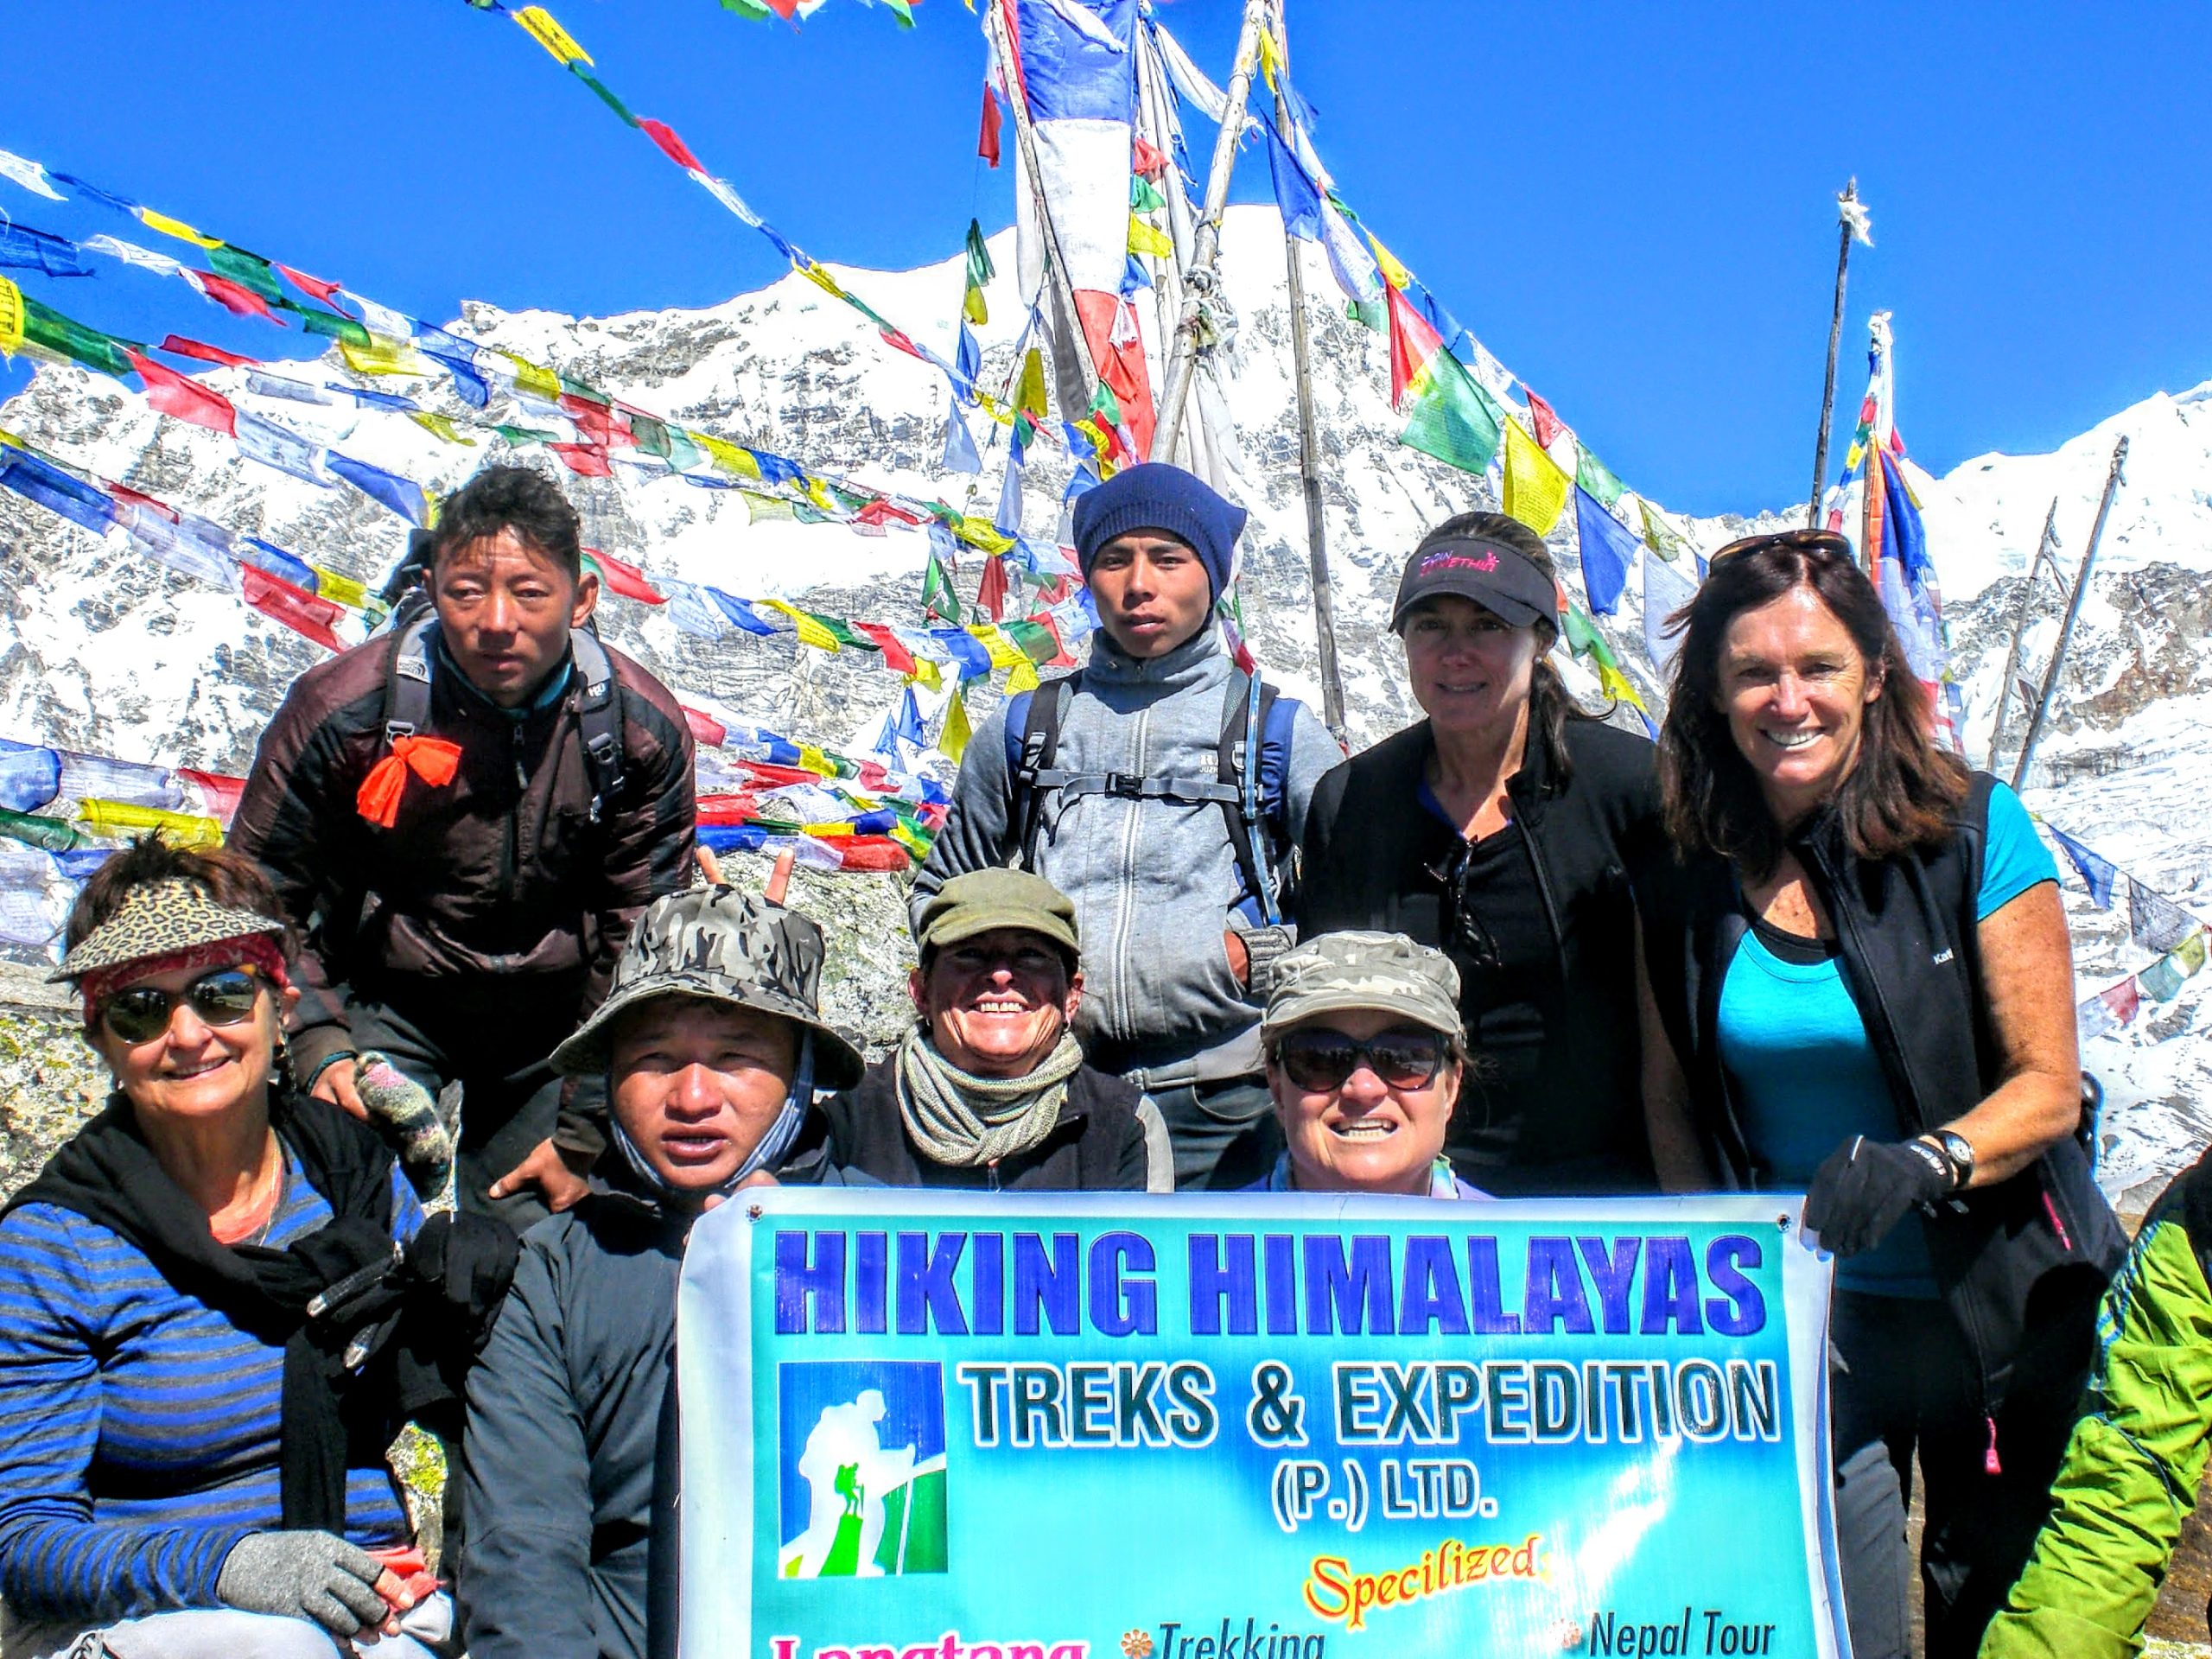 Langtang Valley Trek Images - Hiking Himalayas